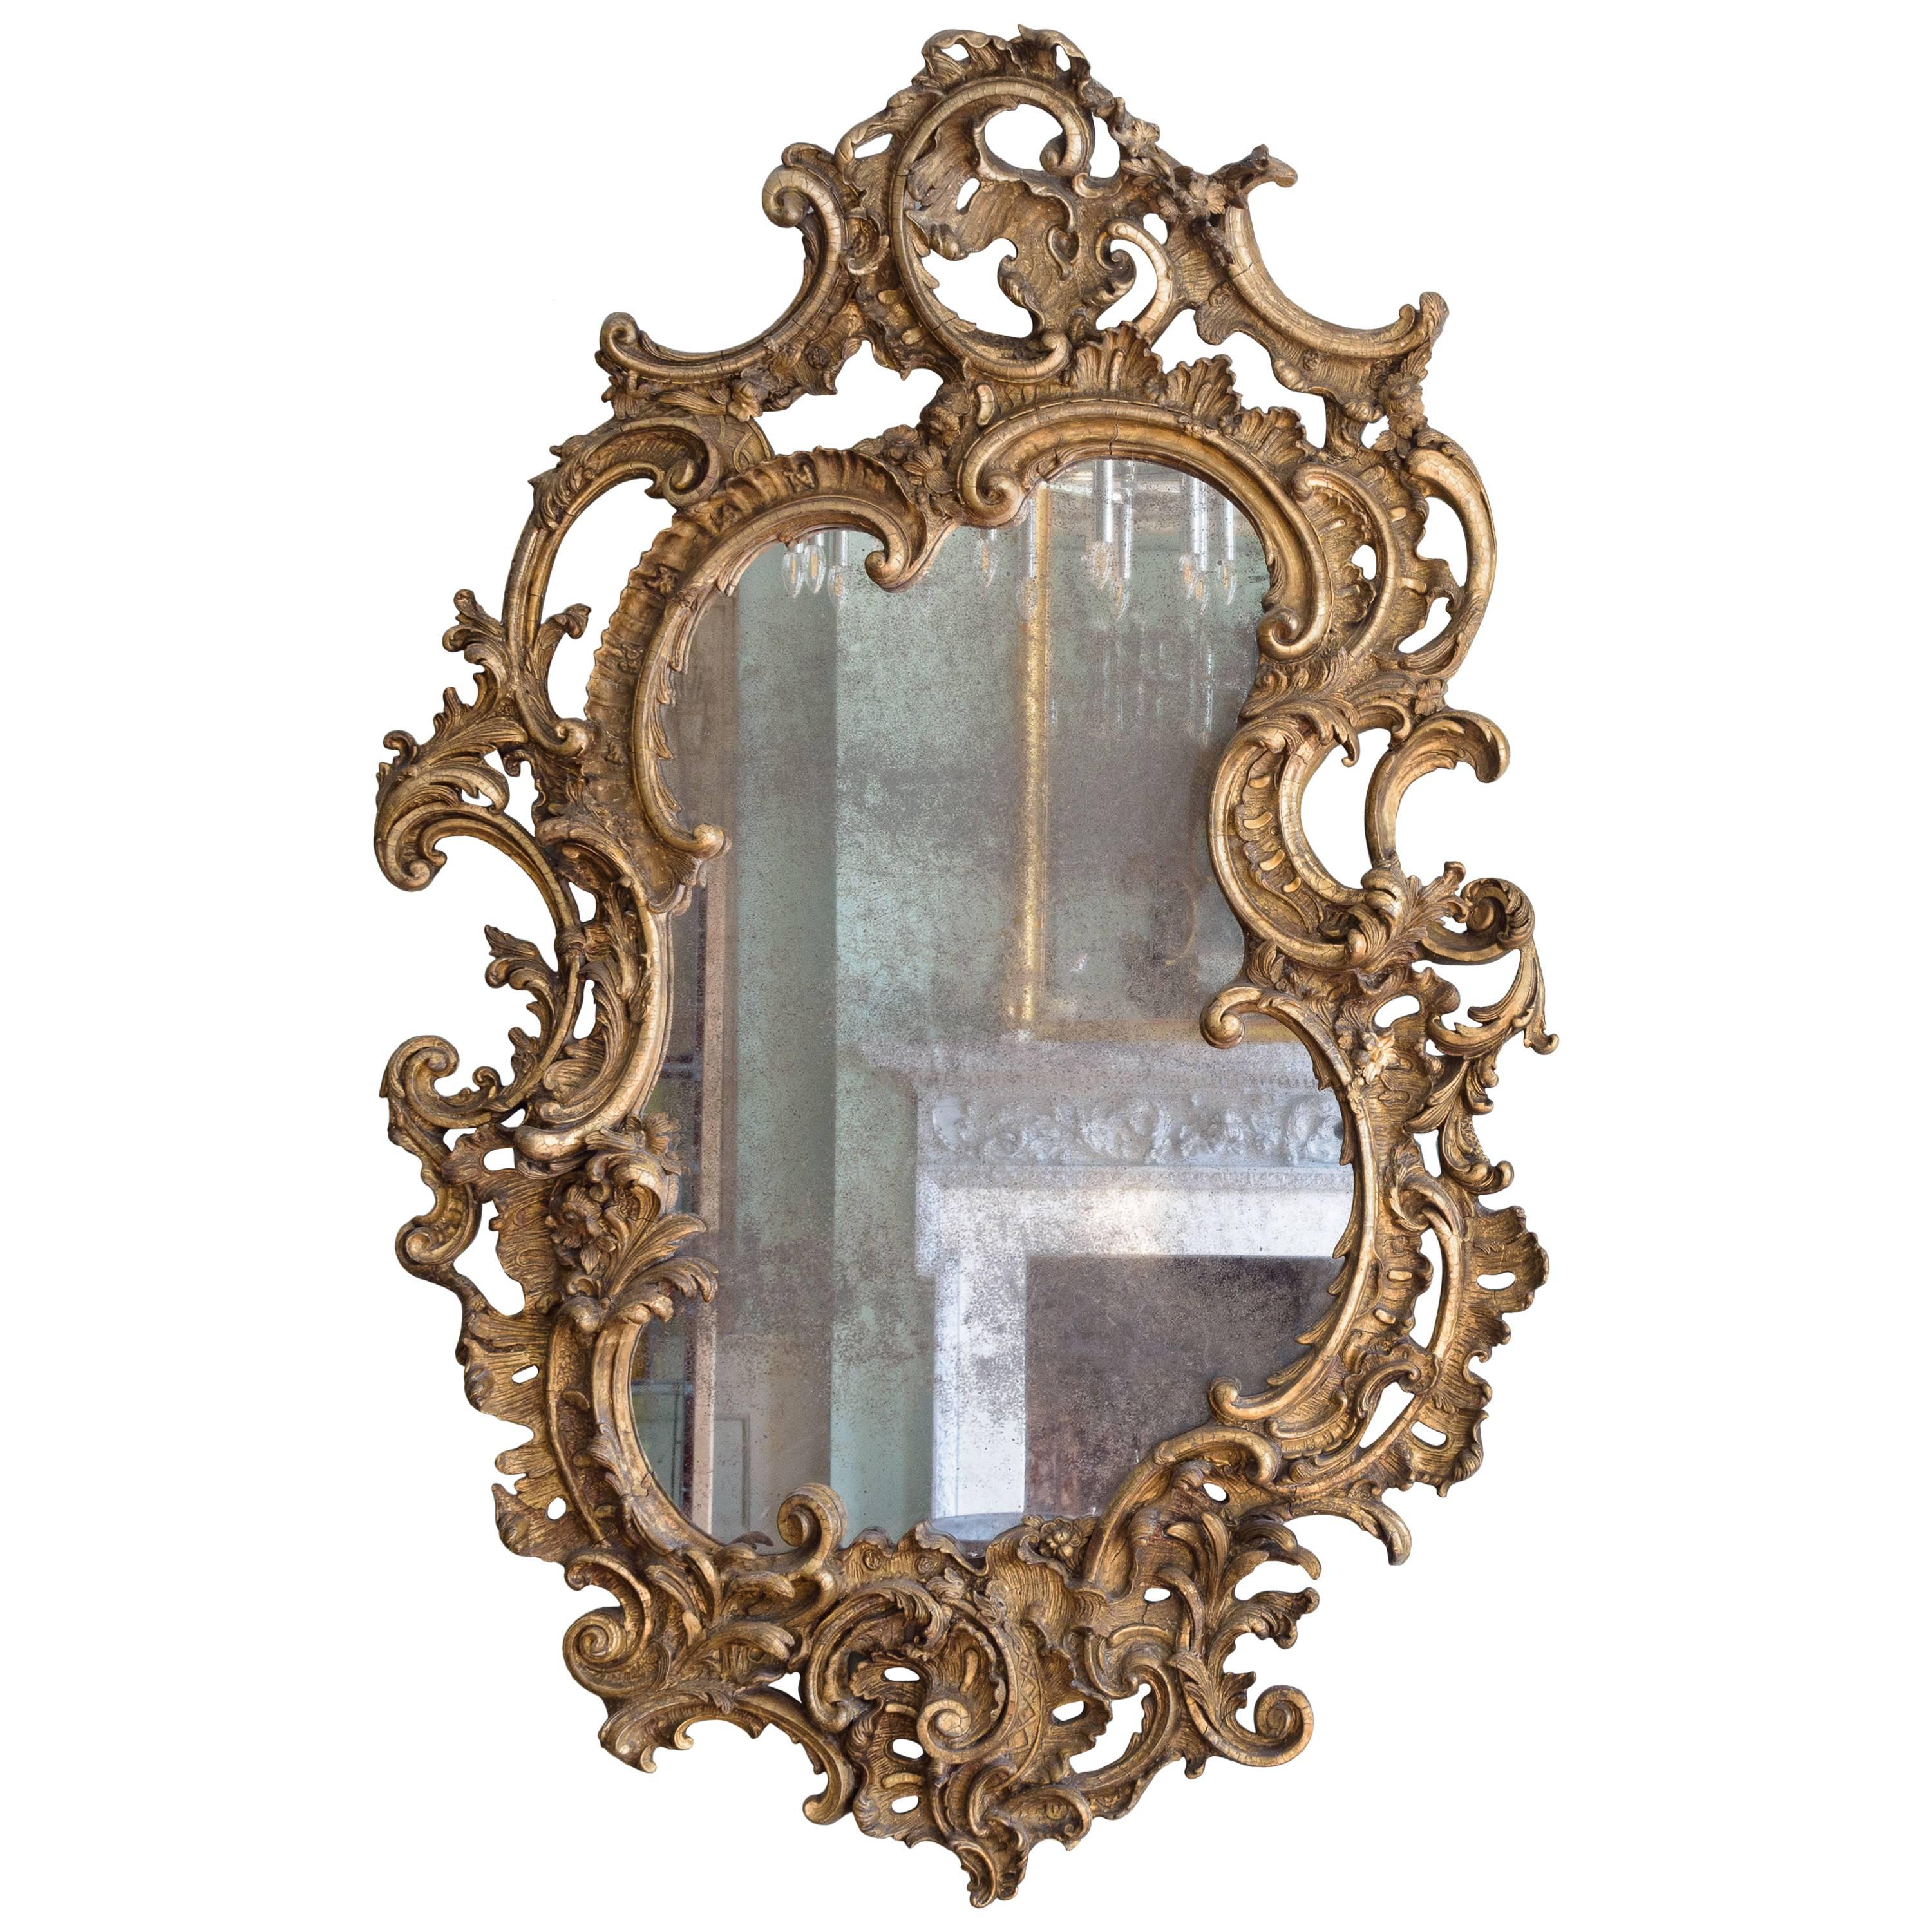 Large Nineteenth Century English Rococo Revival Wall Mirror